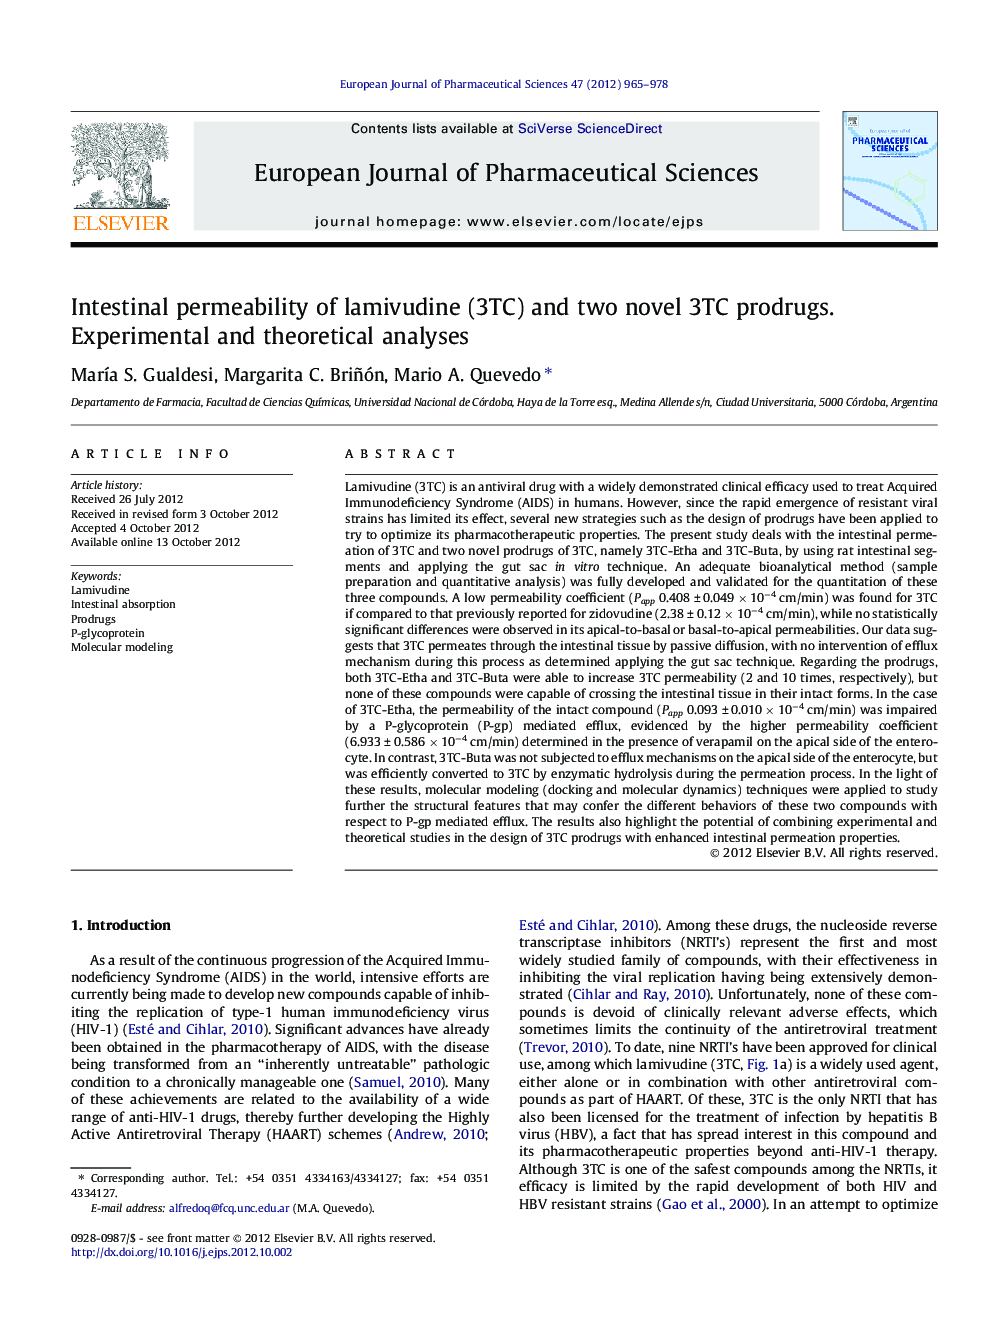 Intestinal permeability of lamivudine (3TC) and two novel 3TC prodrugs. Experimental and theoretical analyses